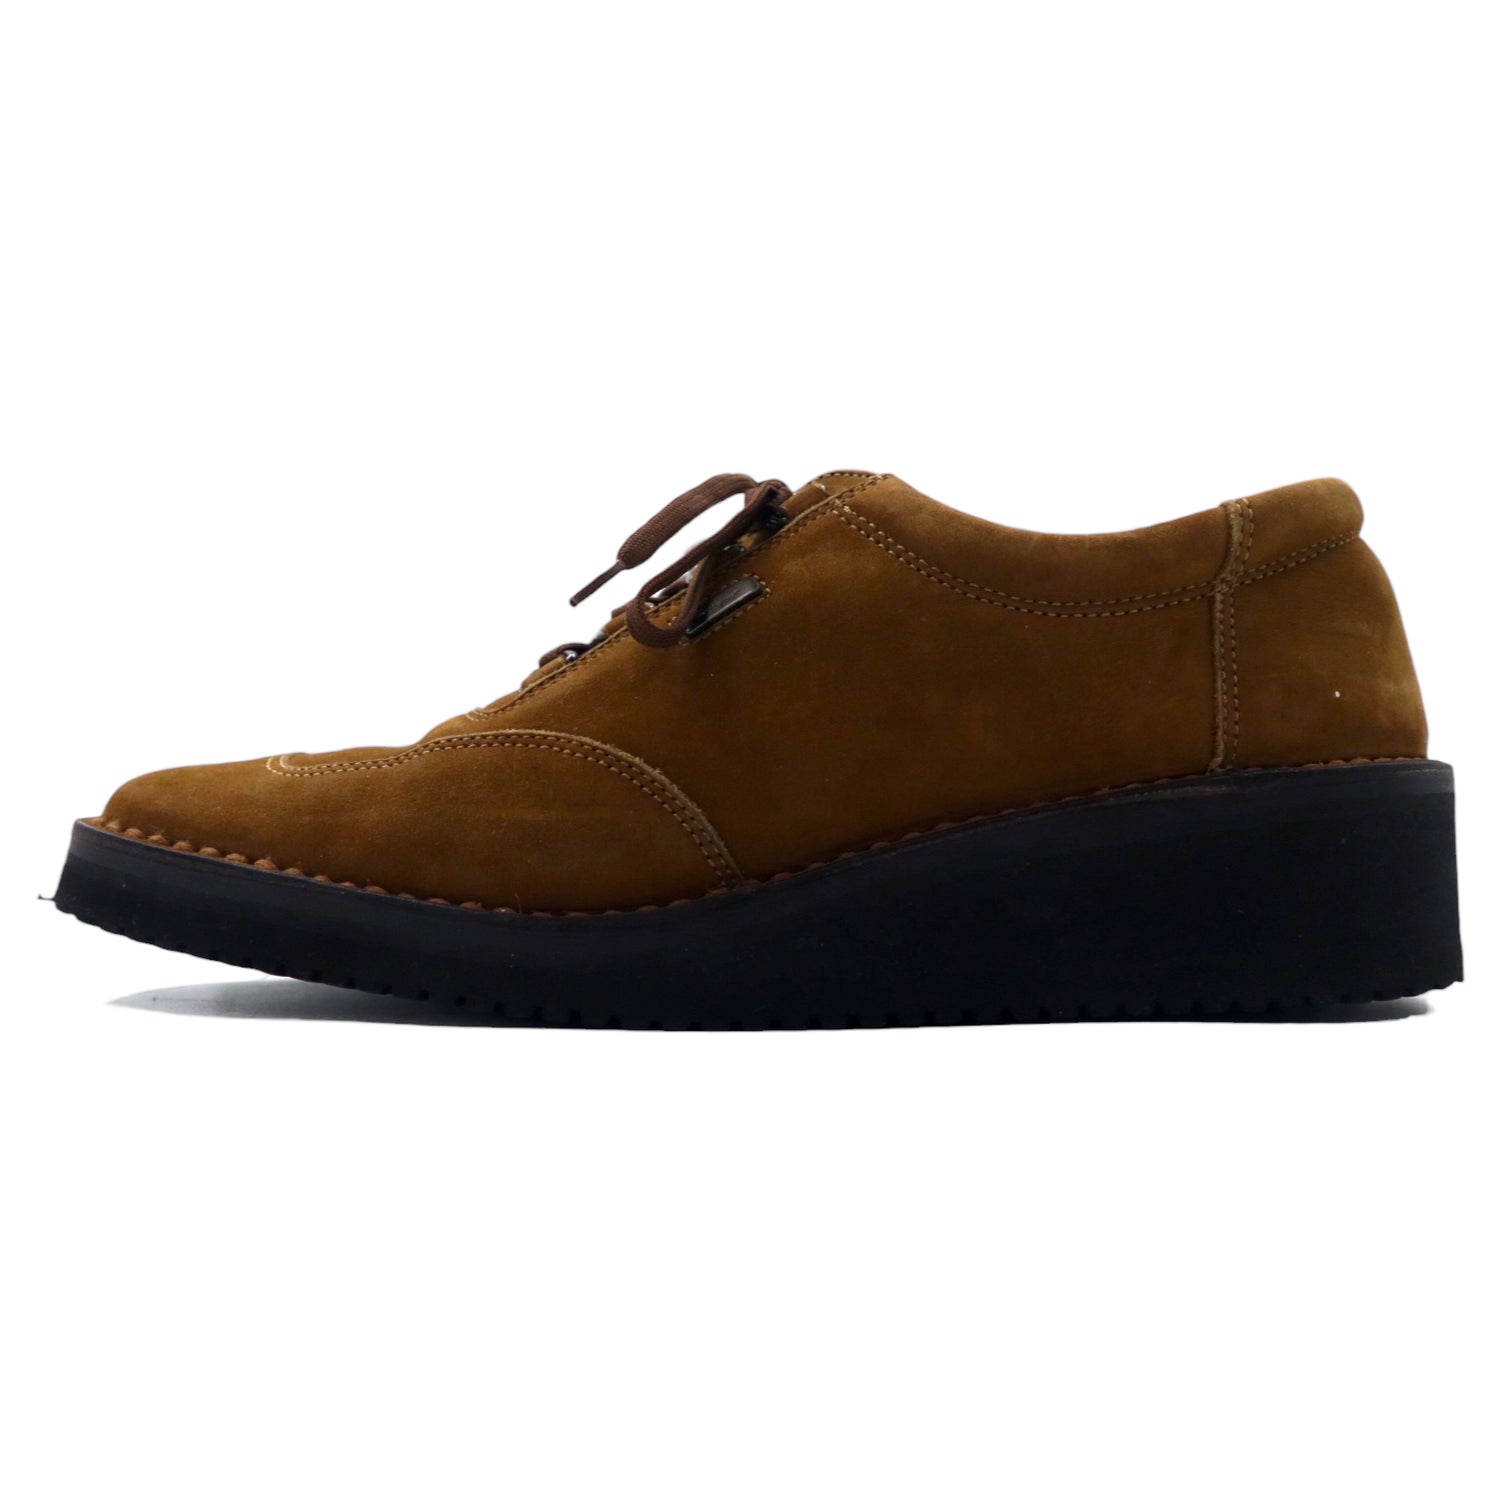 Salvatore Ferragamo SPORT SUEDE Leather Comfort Shoes US6.5 Brown